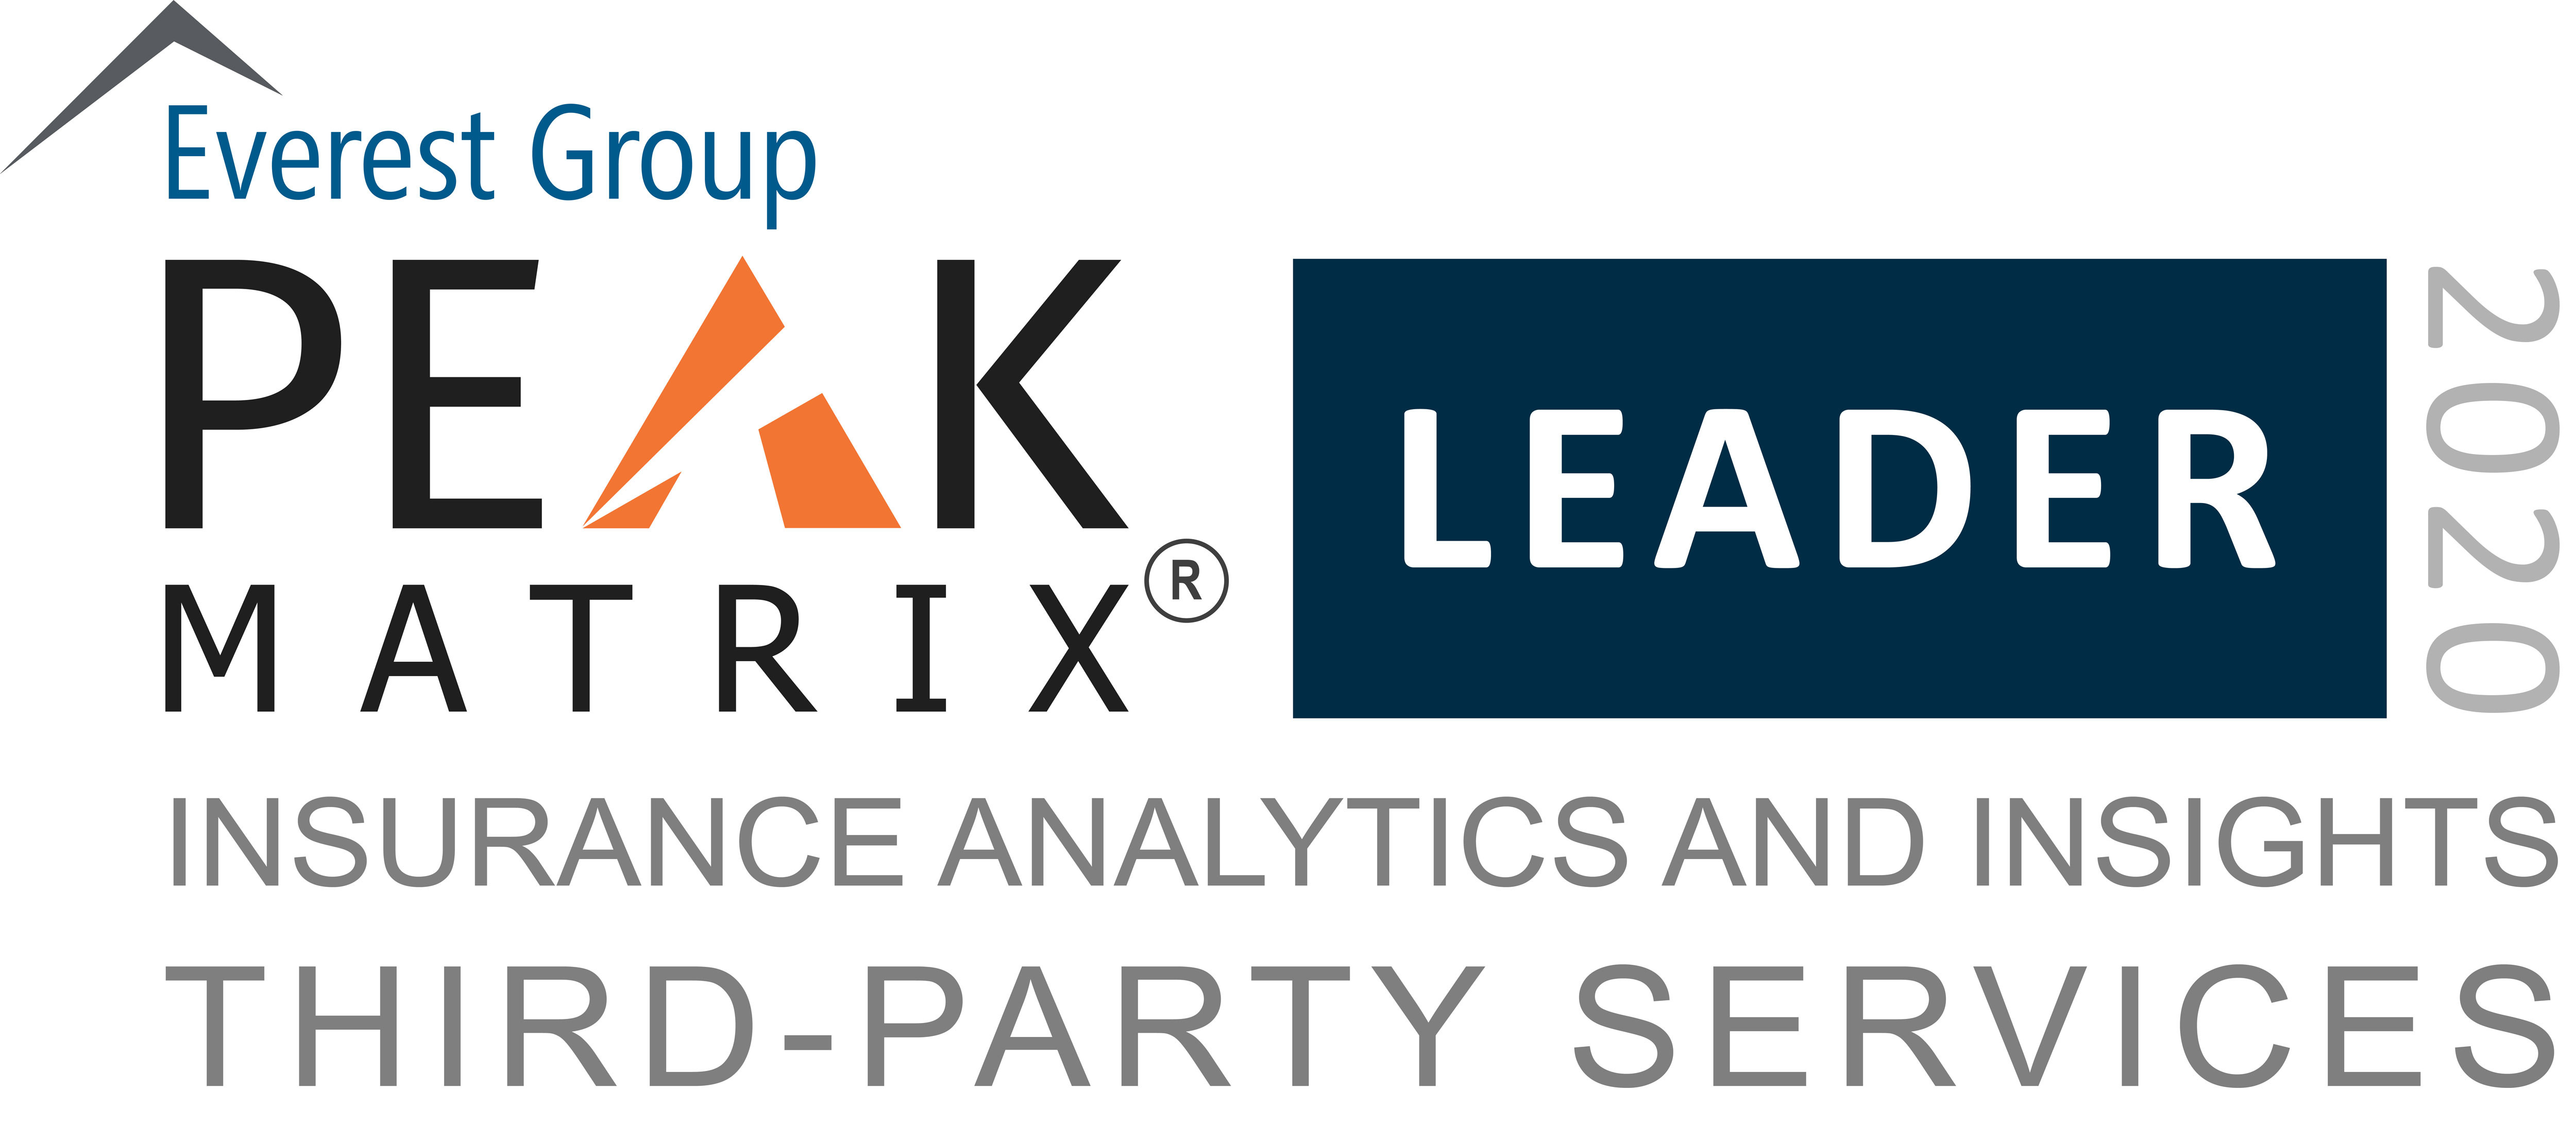 Everest group peak matrix insurance analytics and insights logo